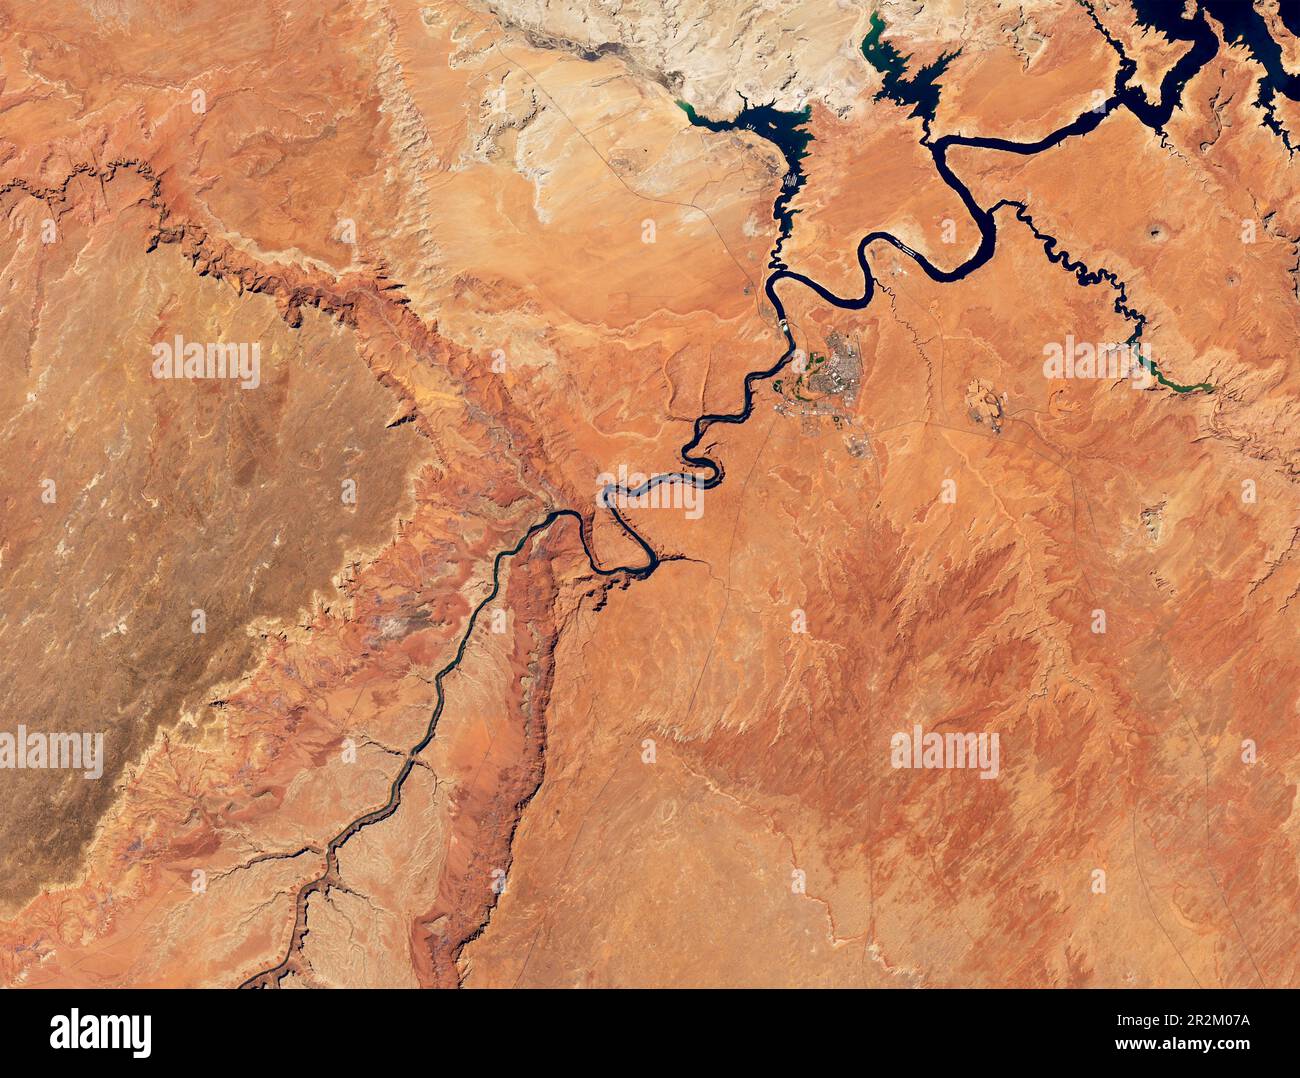 Satellitenansicht des Colorado River in Richtung Horseshoe Bend und Marble Canyon, Arizona, USA Stockfoto